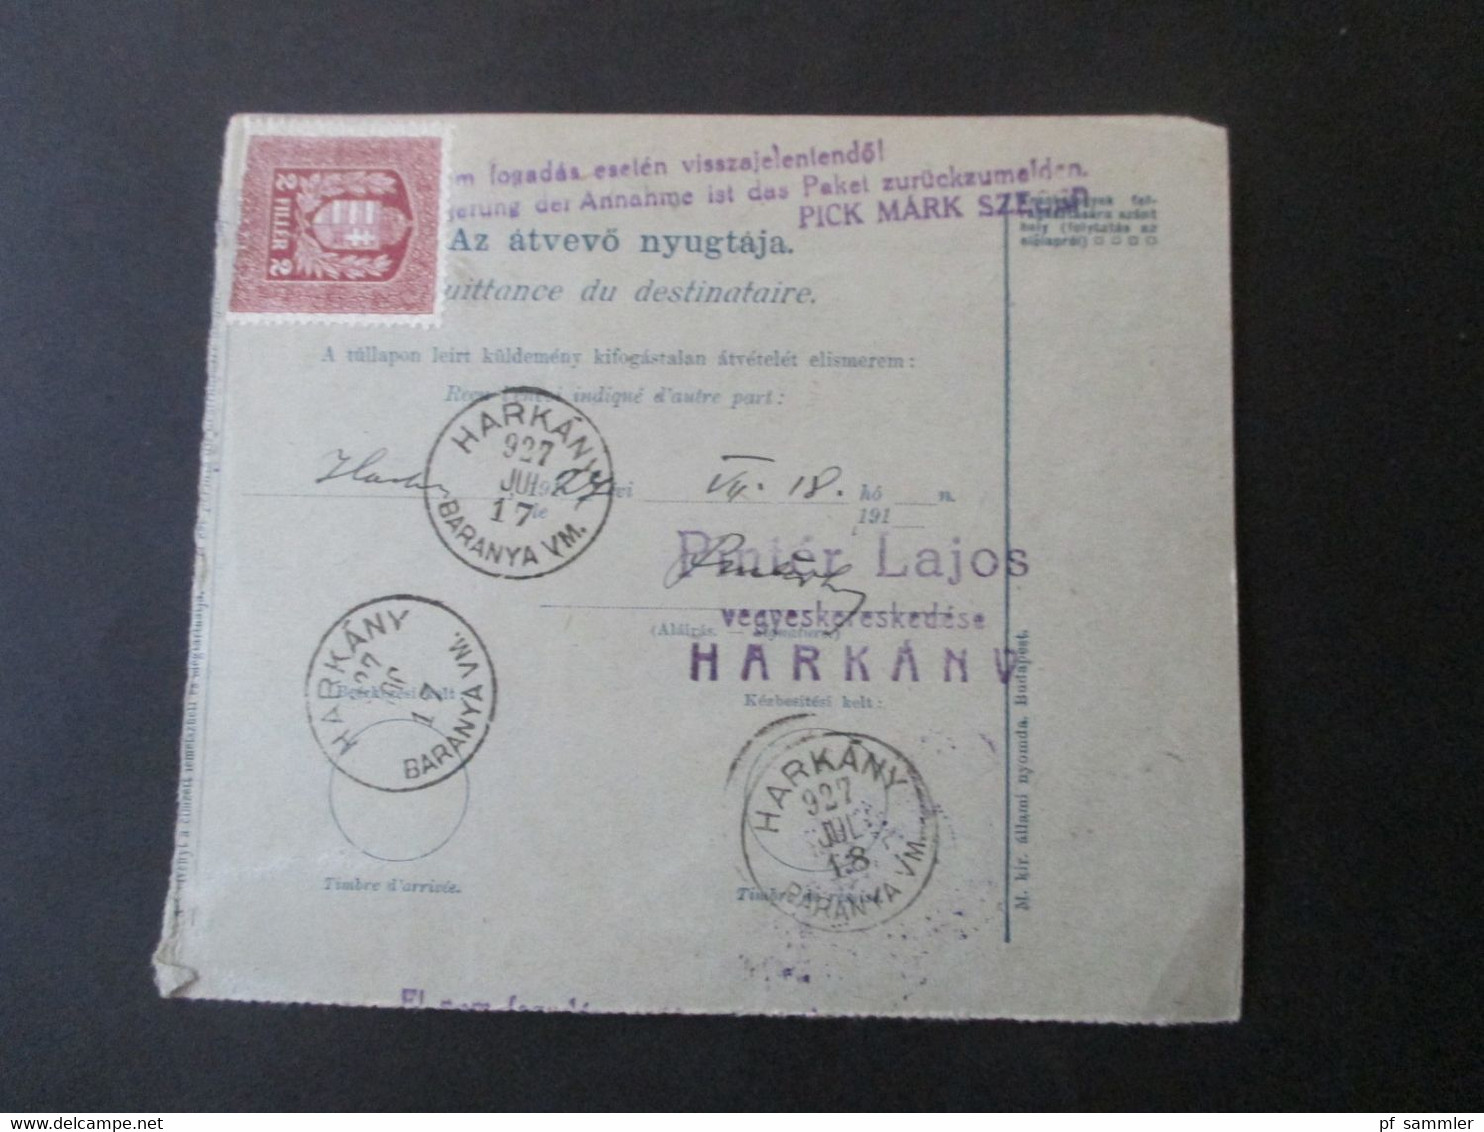 Ungarn 1927 Paketkarte Nachnahme Remboursement mit Fiskalmarke und rotem Stempel Keszpenzzel Bermentesitive Szeged 2